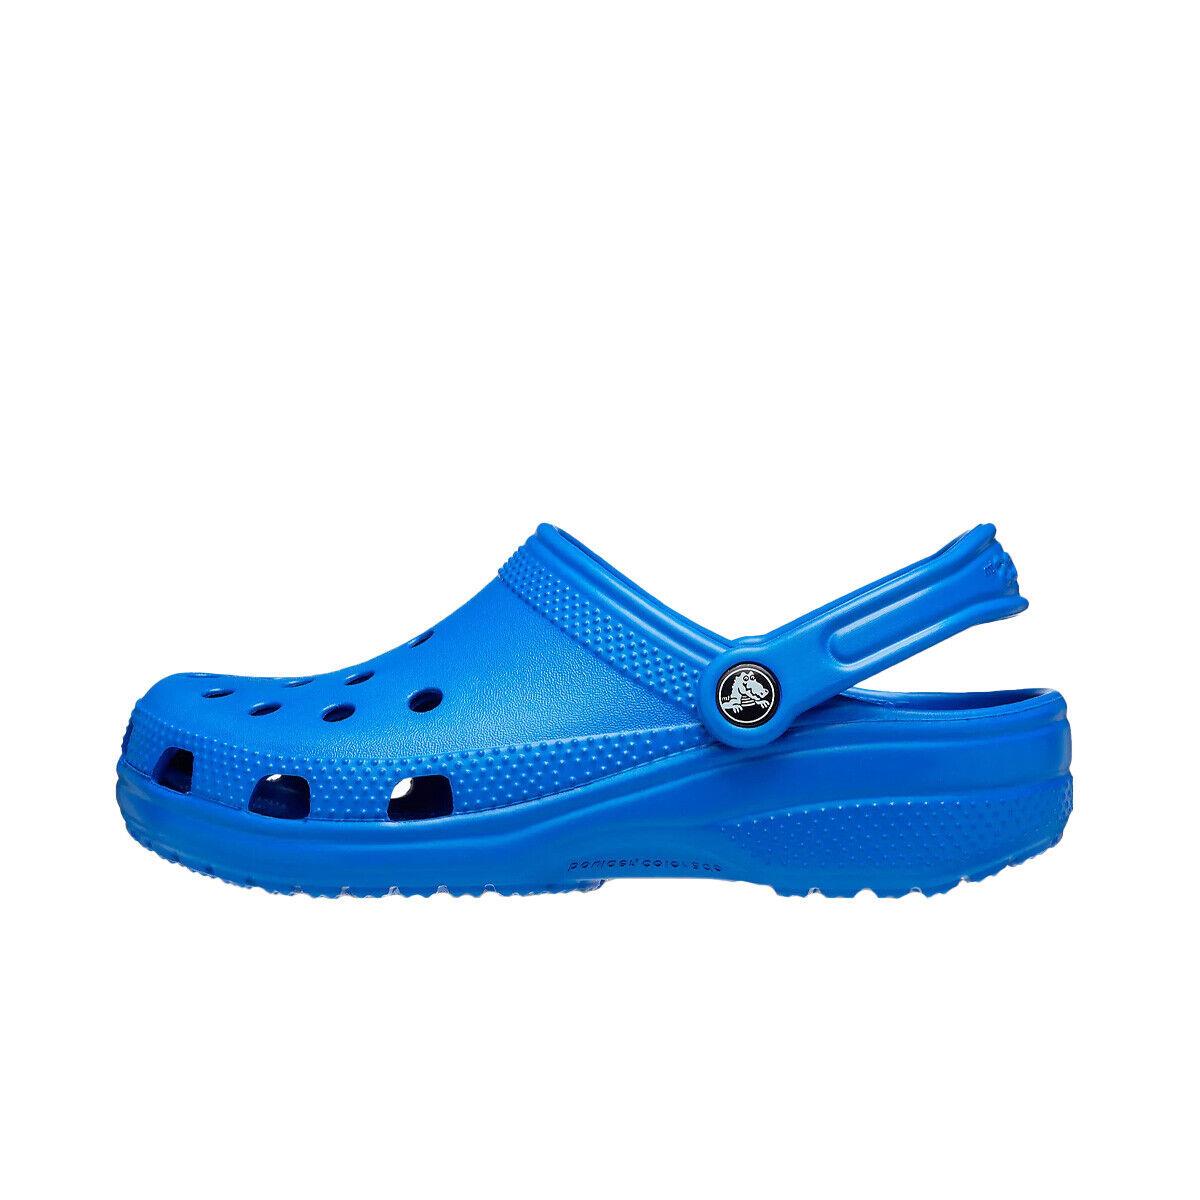 Crocs Clogs Classic Unisex Adults Blue 10001 Slip On